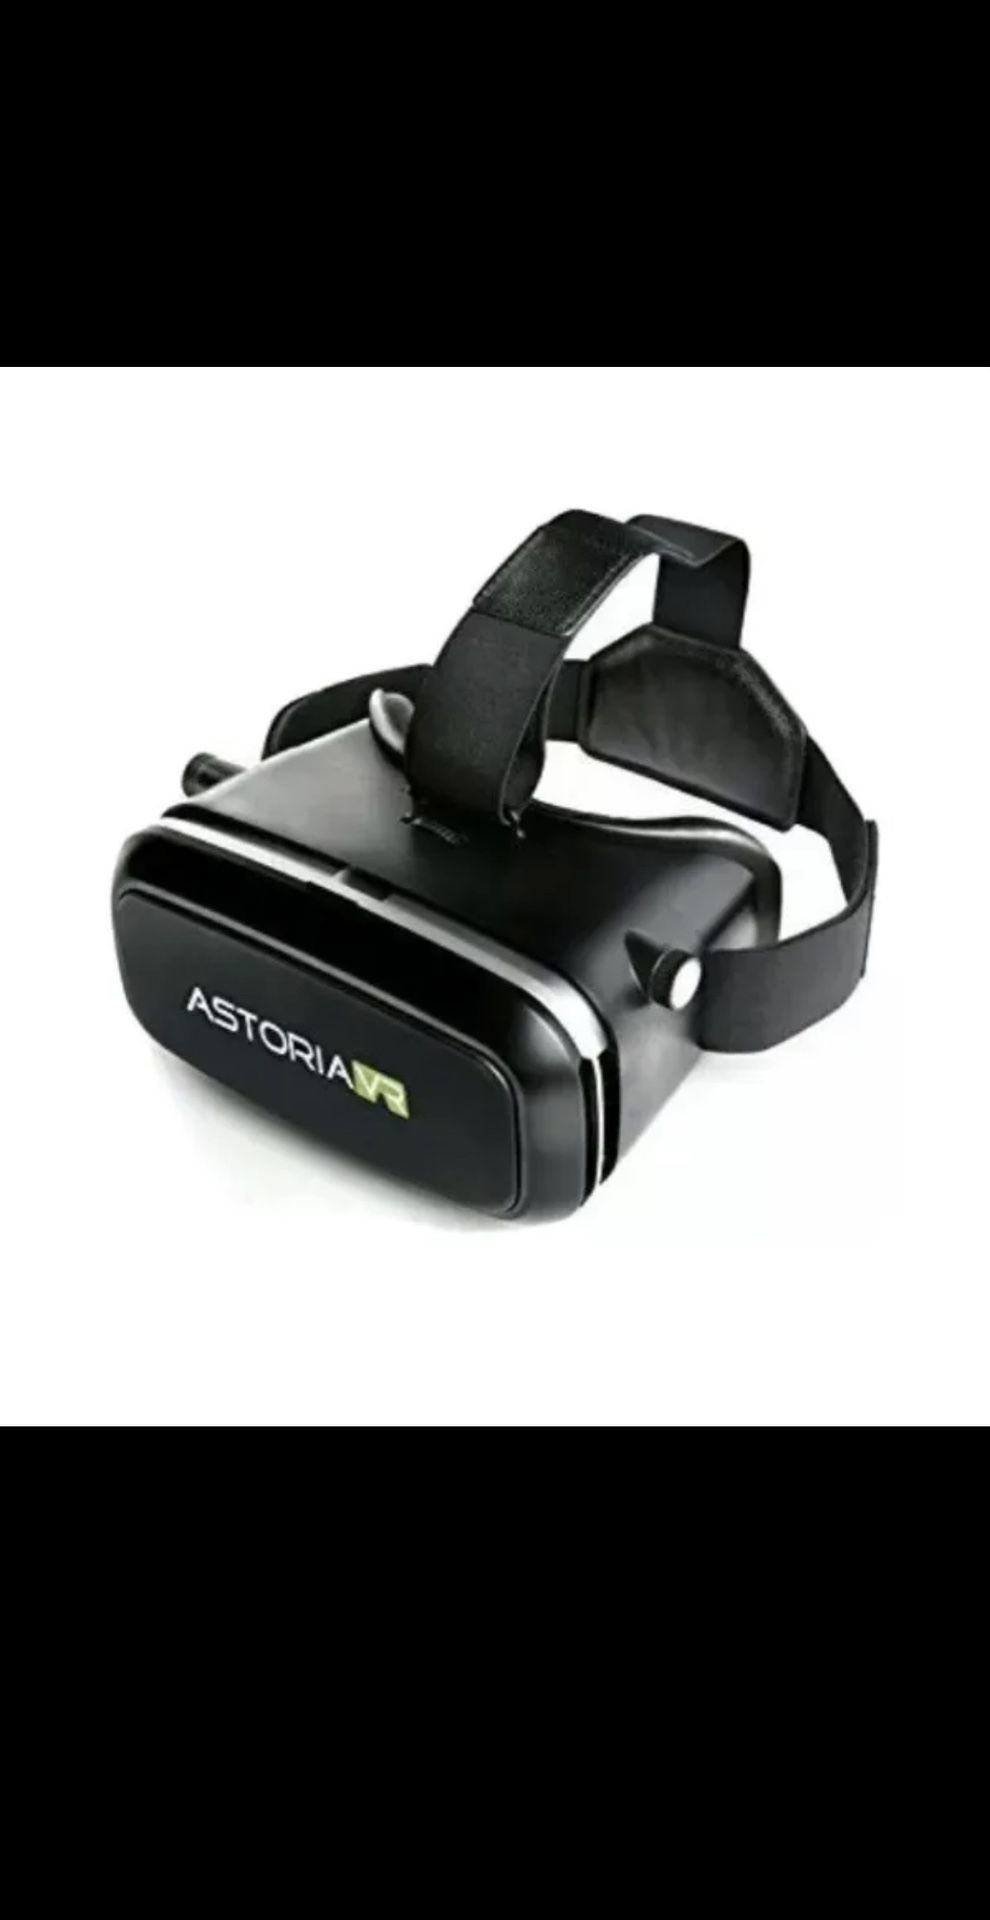 Astoria VR Latest Edition 